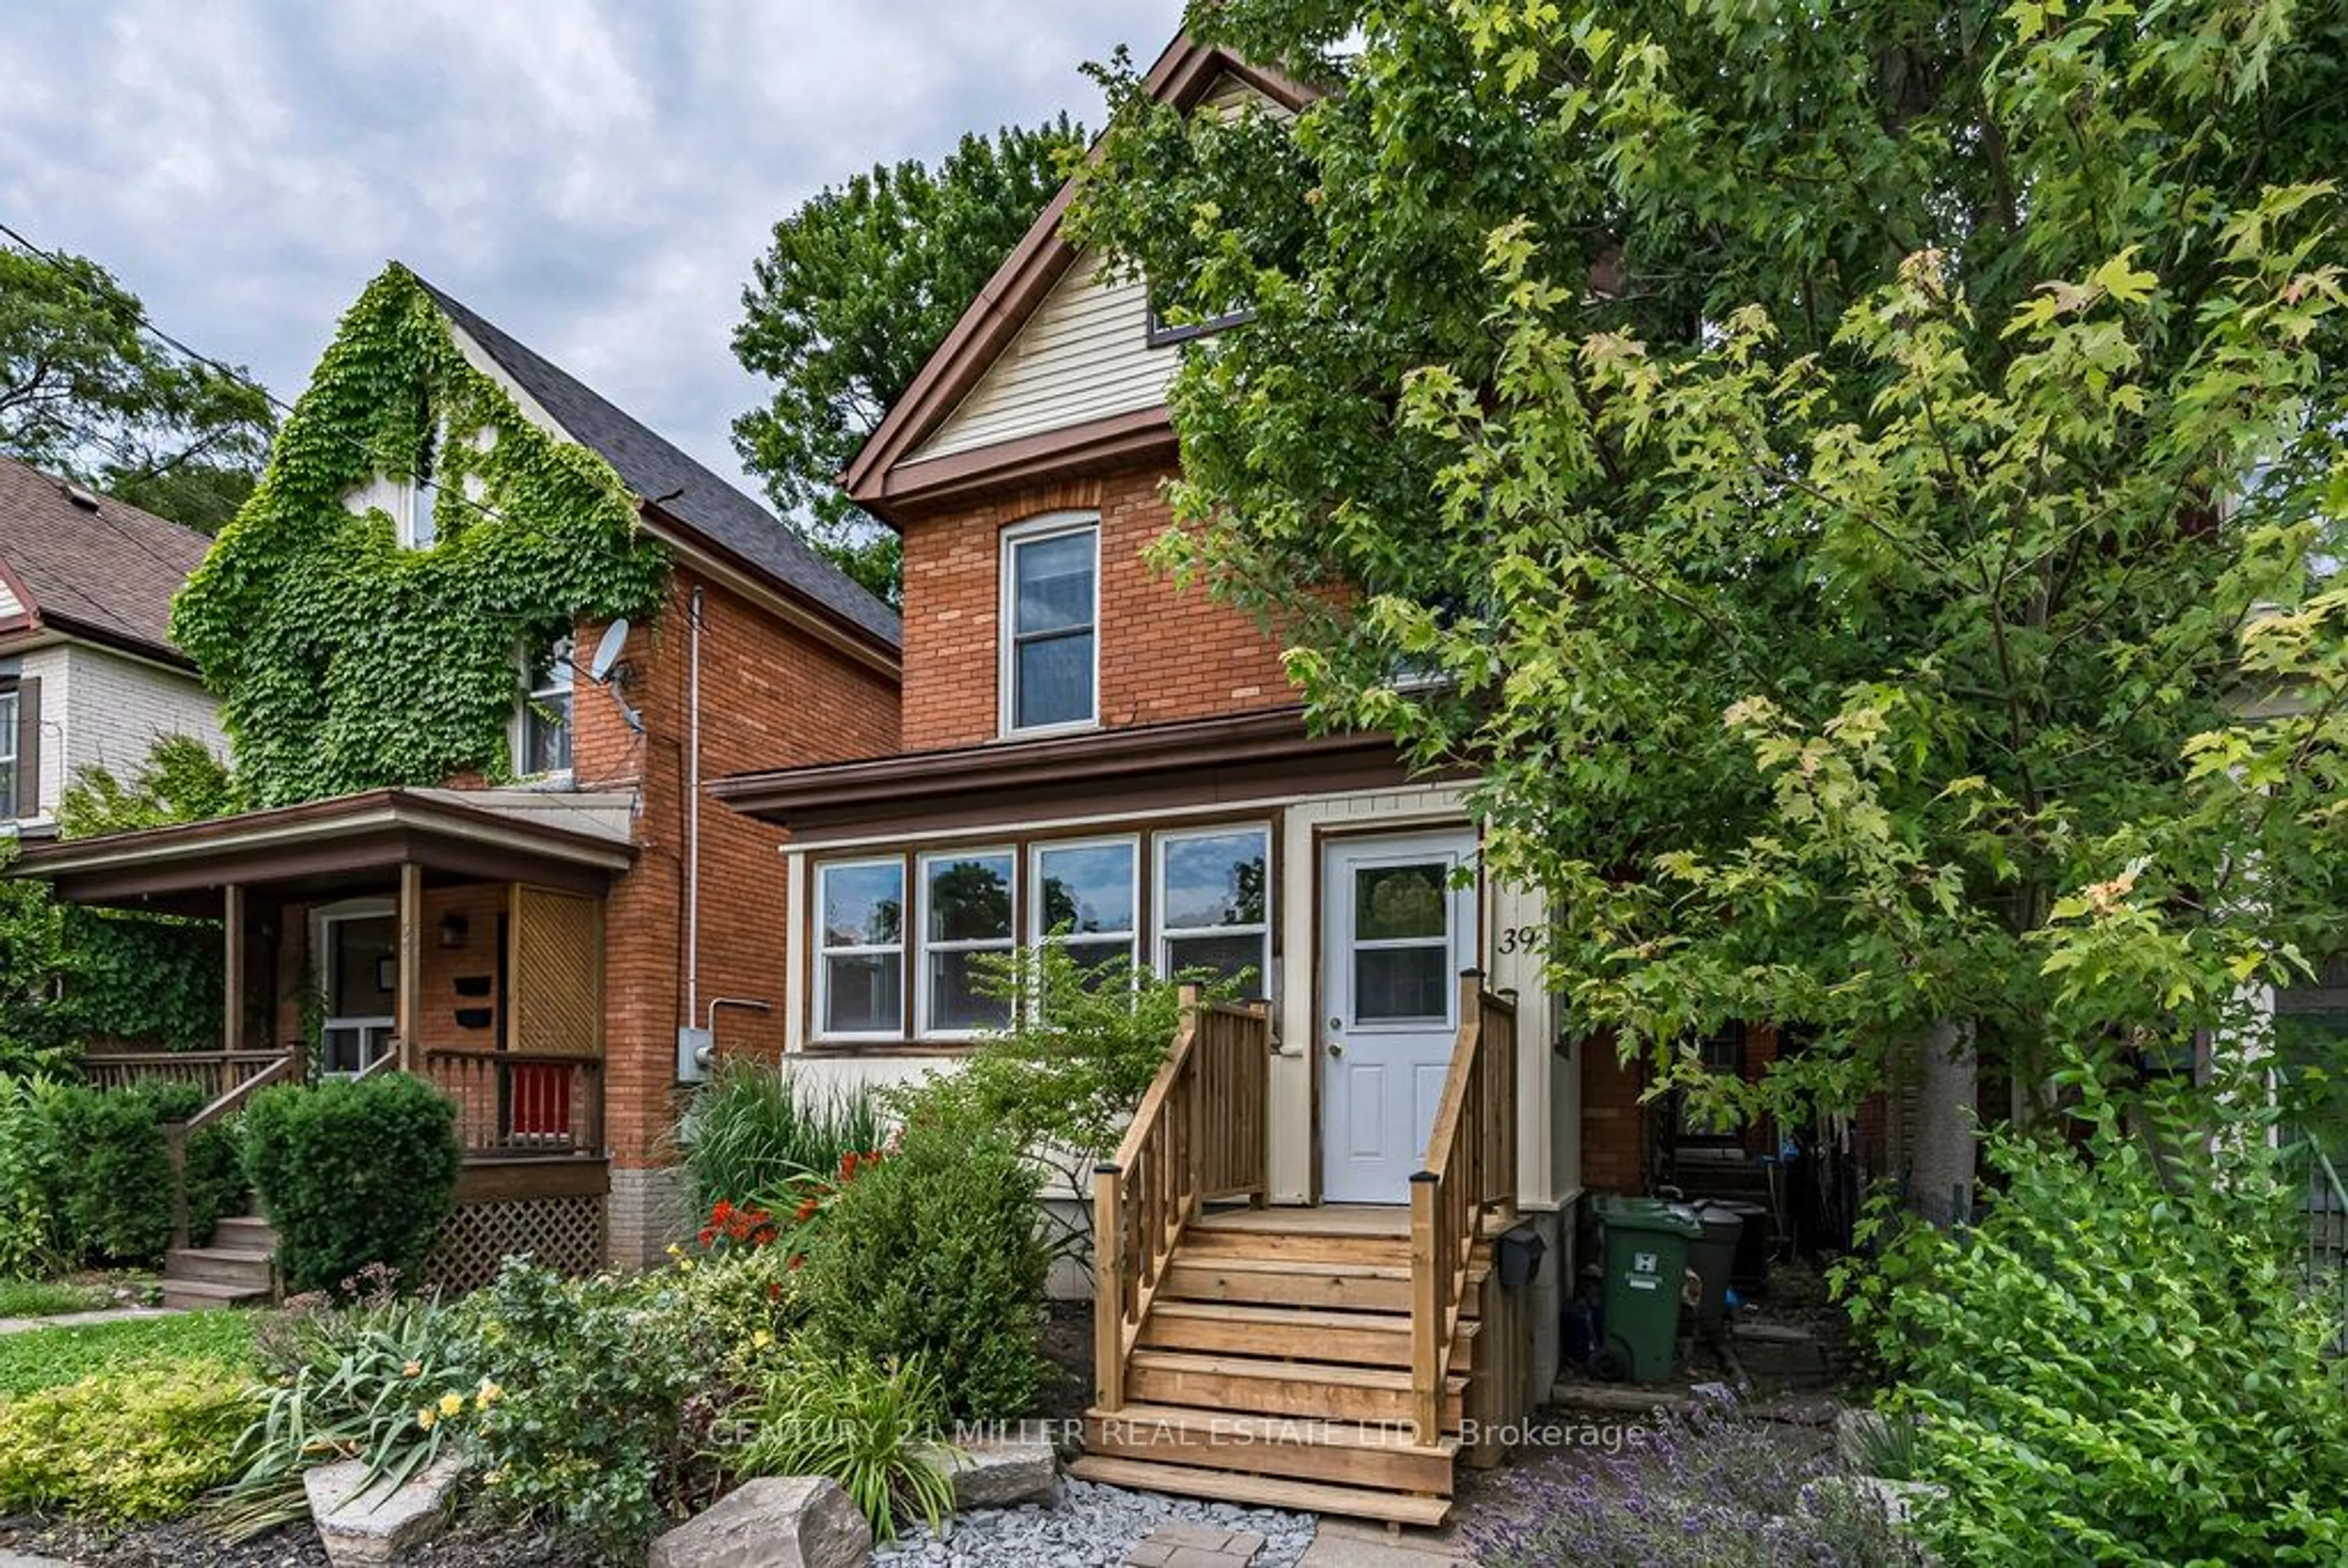 Home with brick exterior material for 39 Dundas St, Hamilton Ontario L9H 1A1